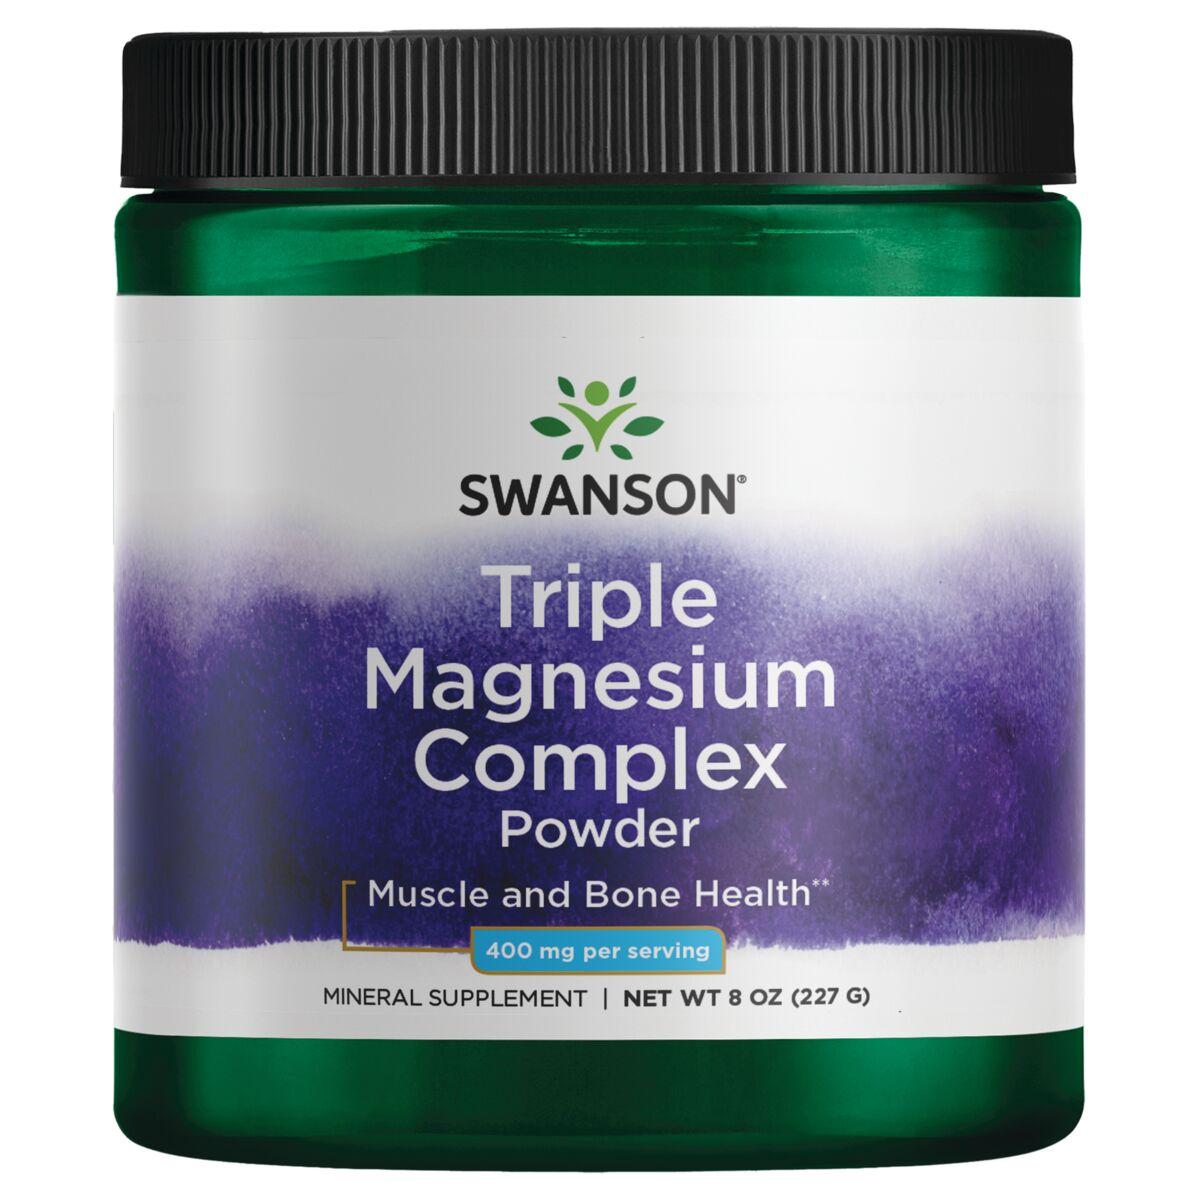 Swanson Premium Triple Magnesium Complex Powder | 400 mg | 8 oz Powder